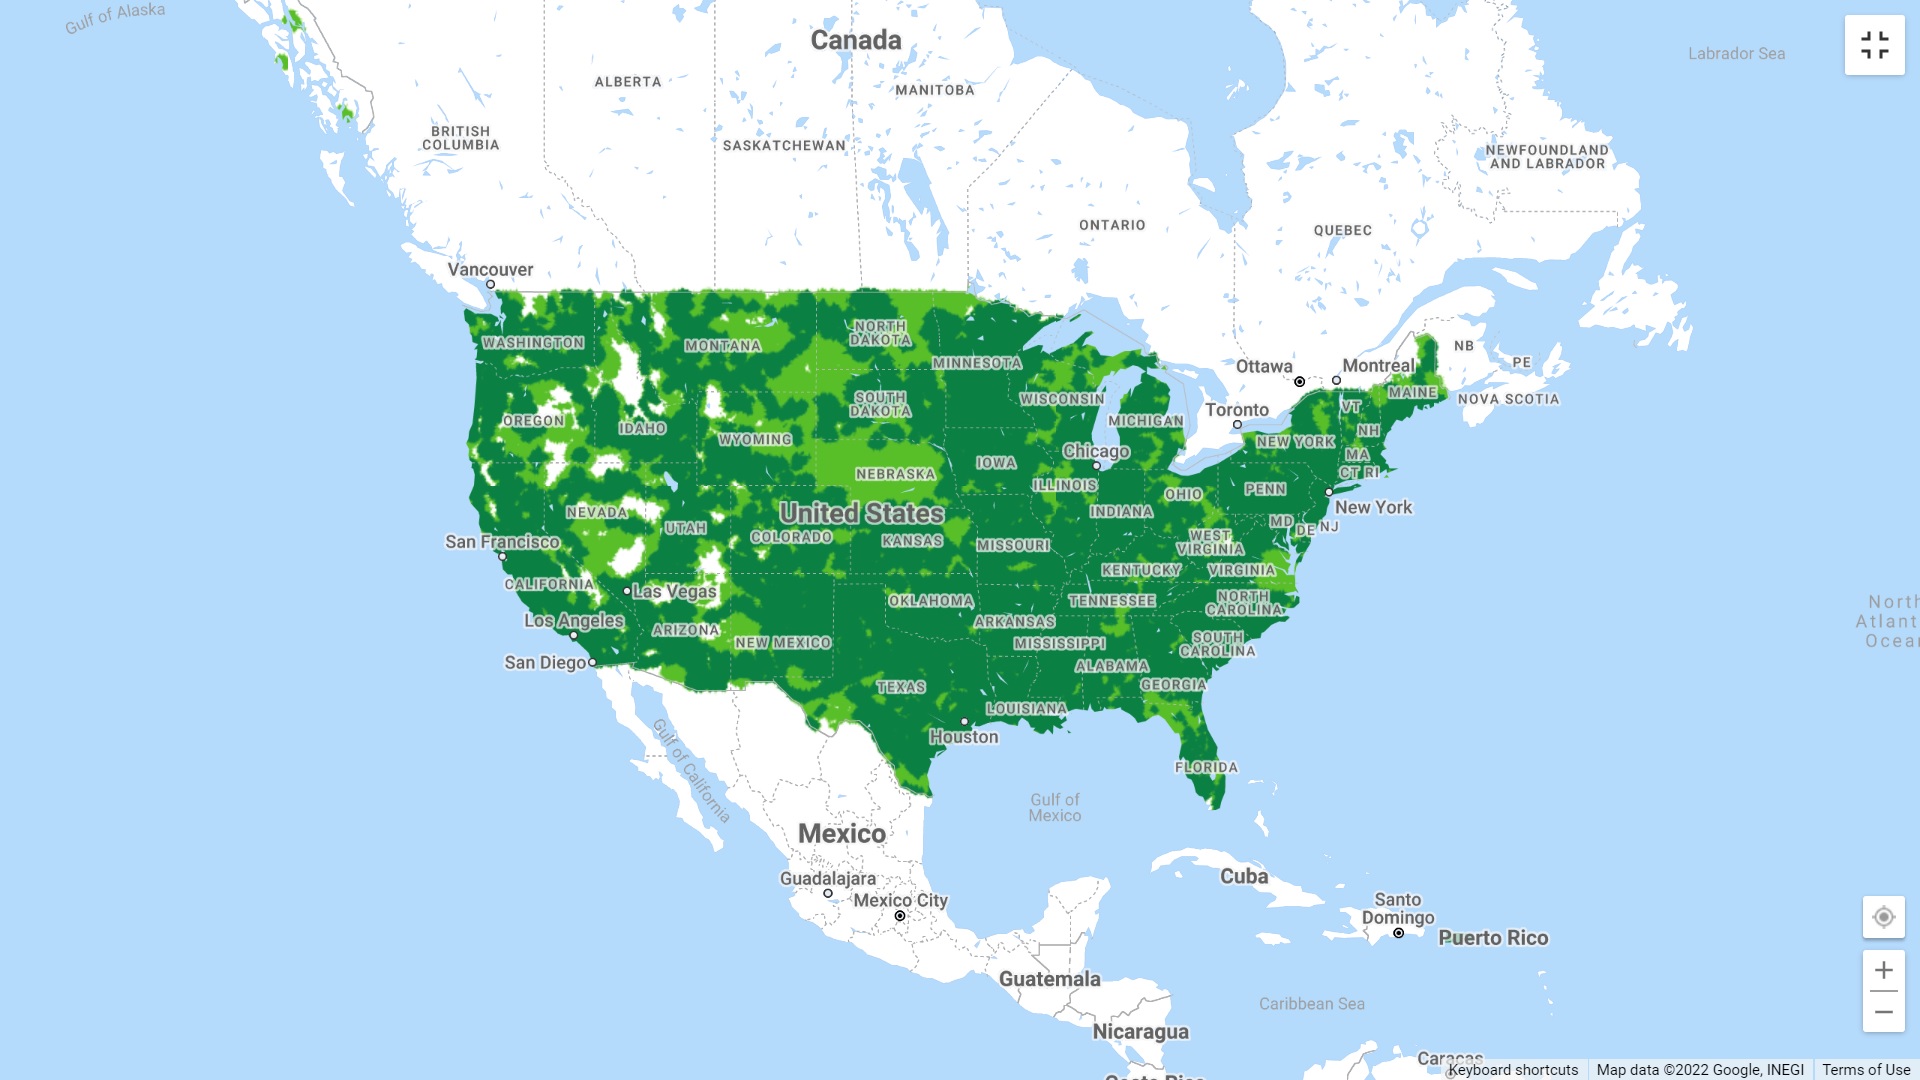 Google fi Network Coverage Map